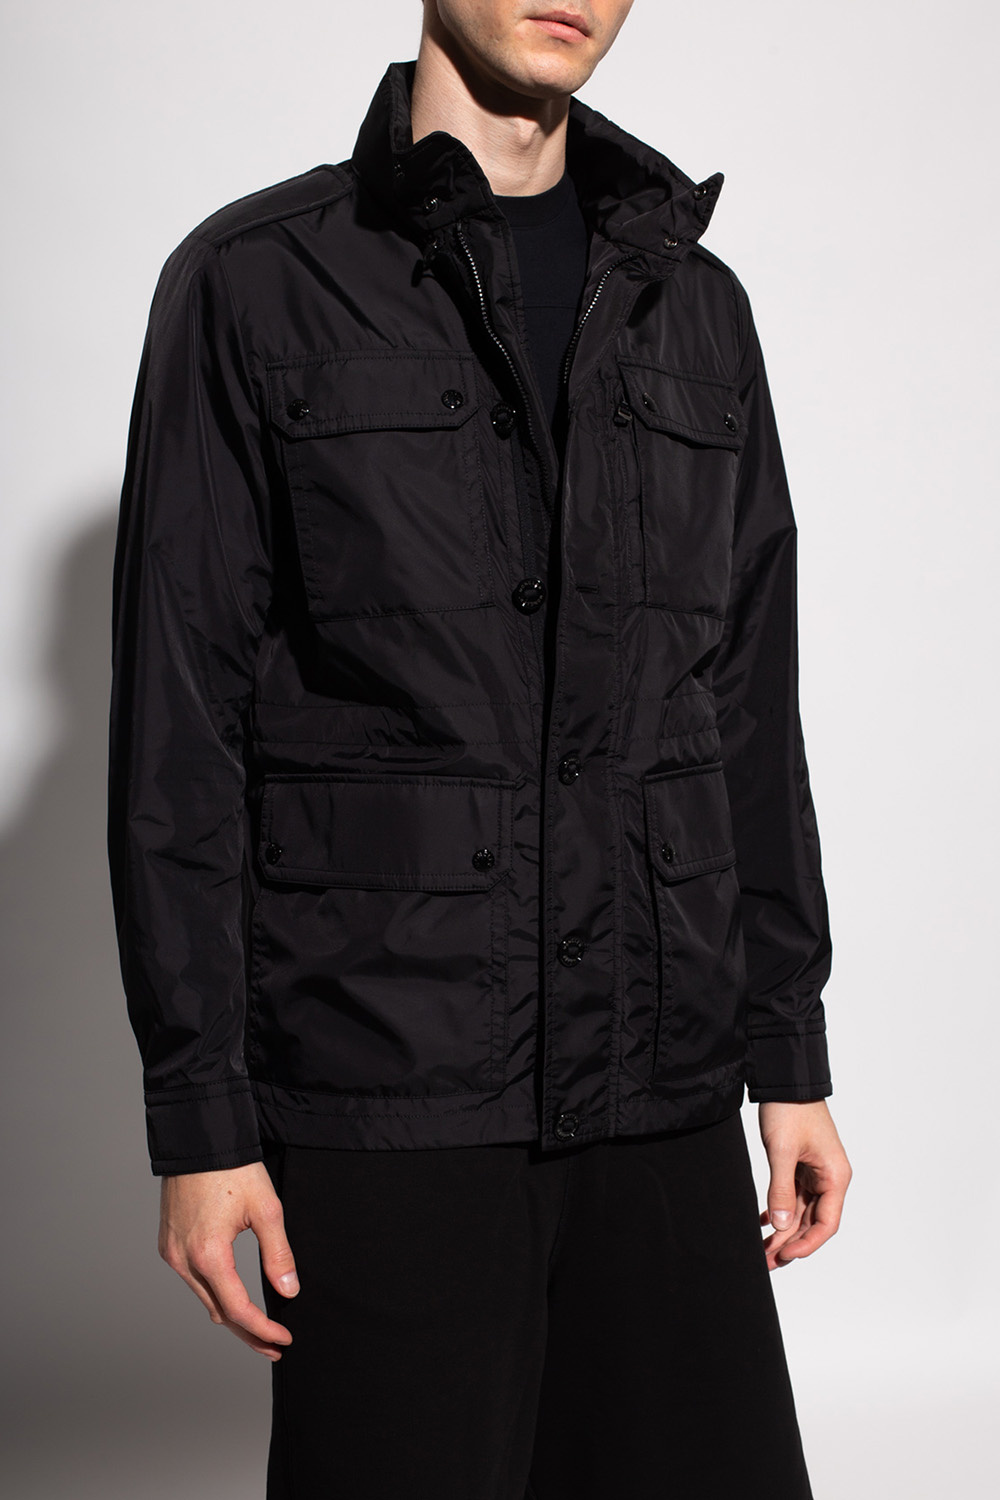 IetpShops | Moncler 'Lez' jacket | Men's Clothing | Axel Arigato 